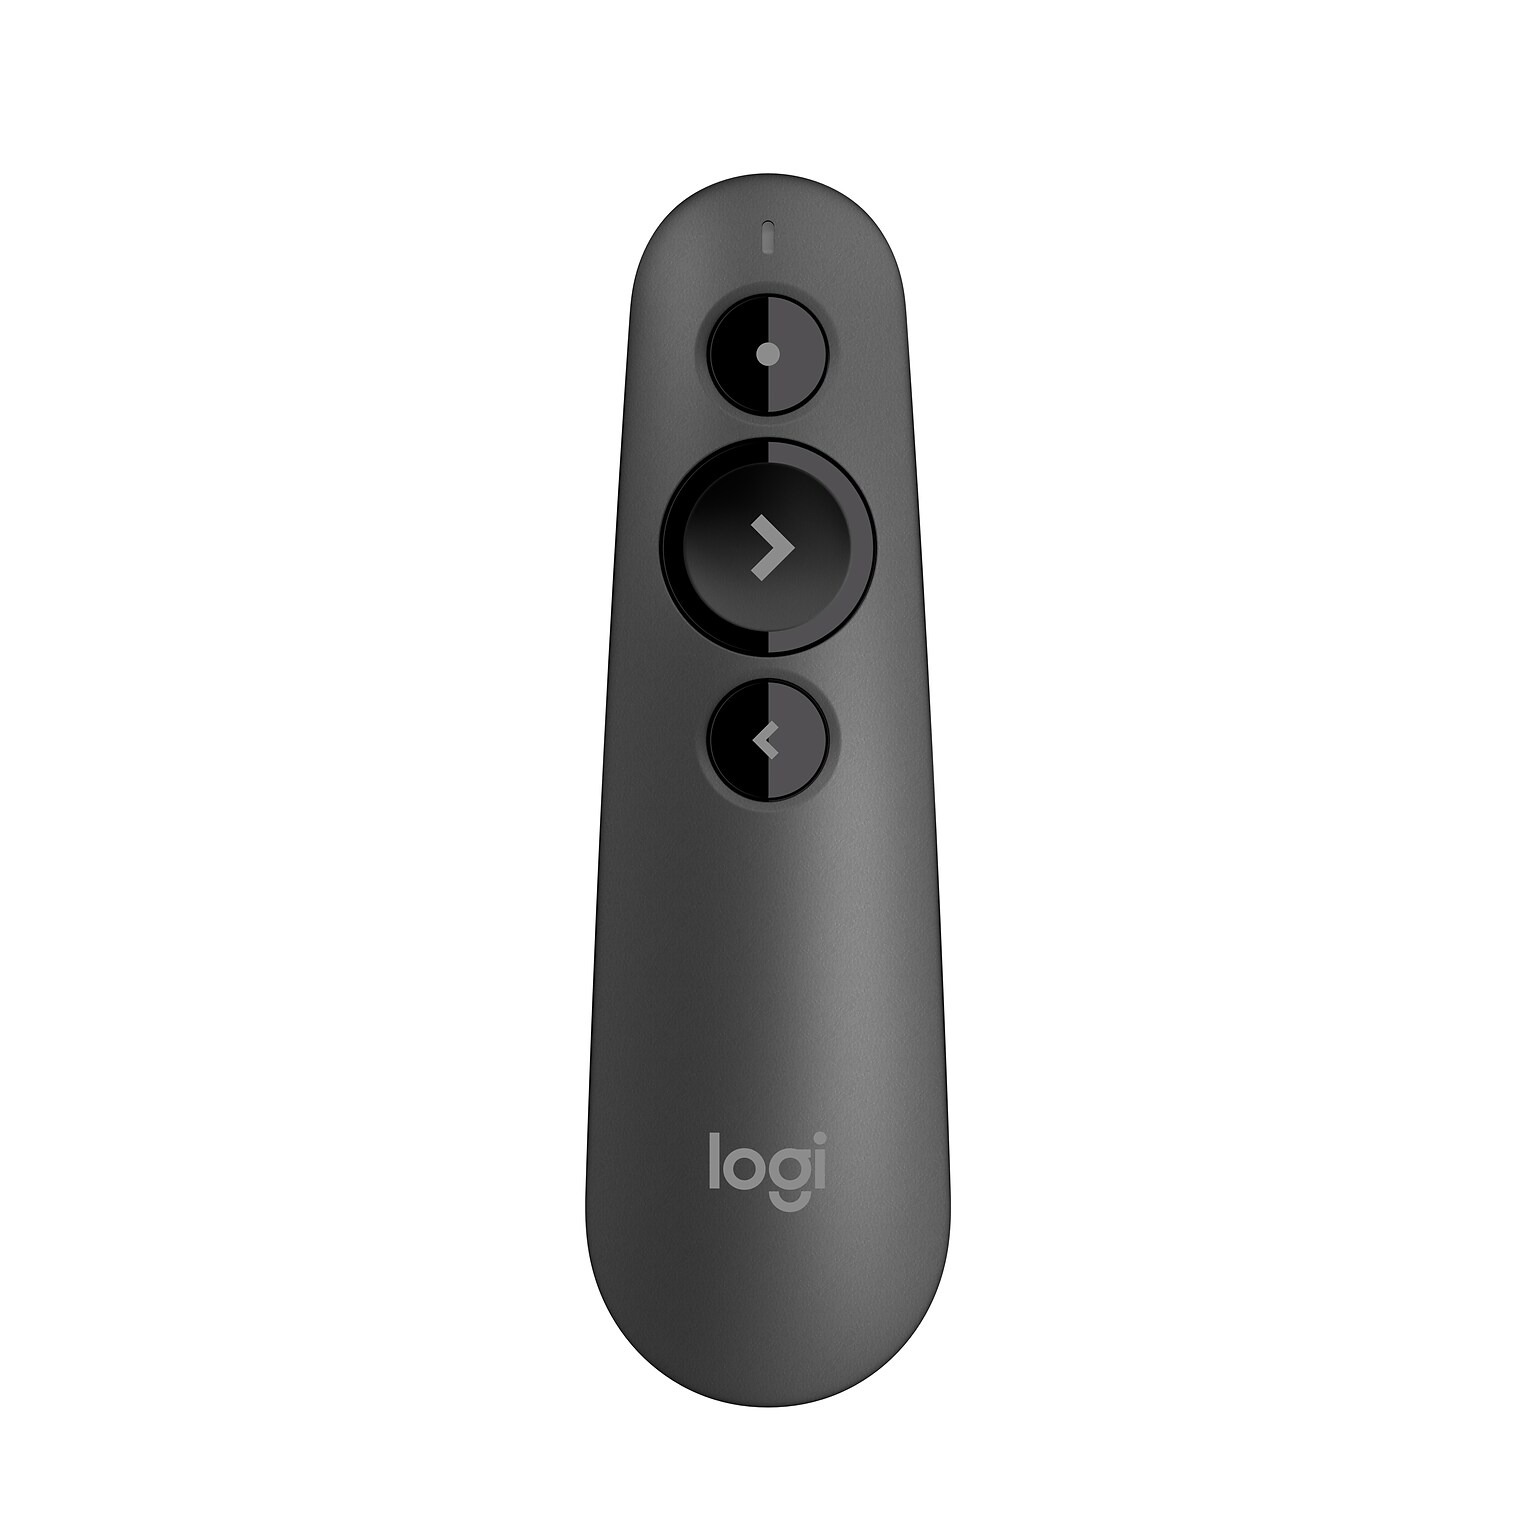 Logitech R500 Laser Presentation Remote, Gray (910-006518)